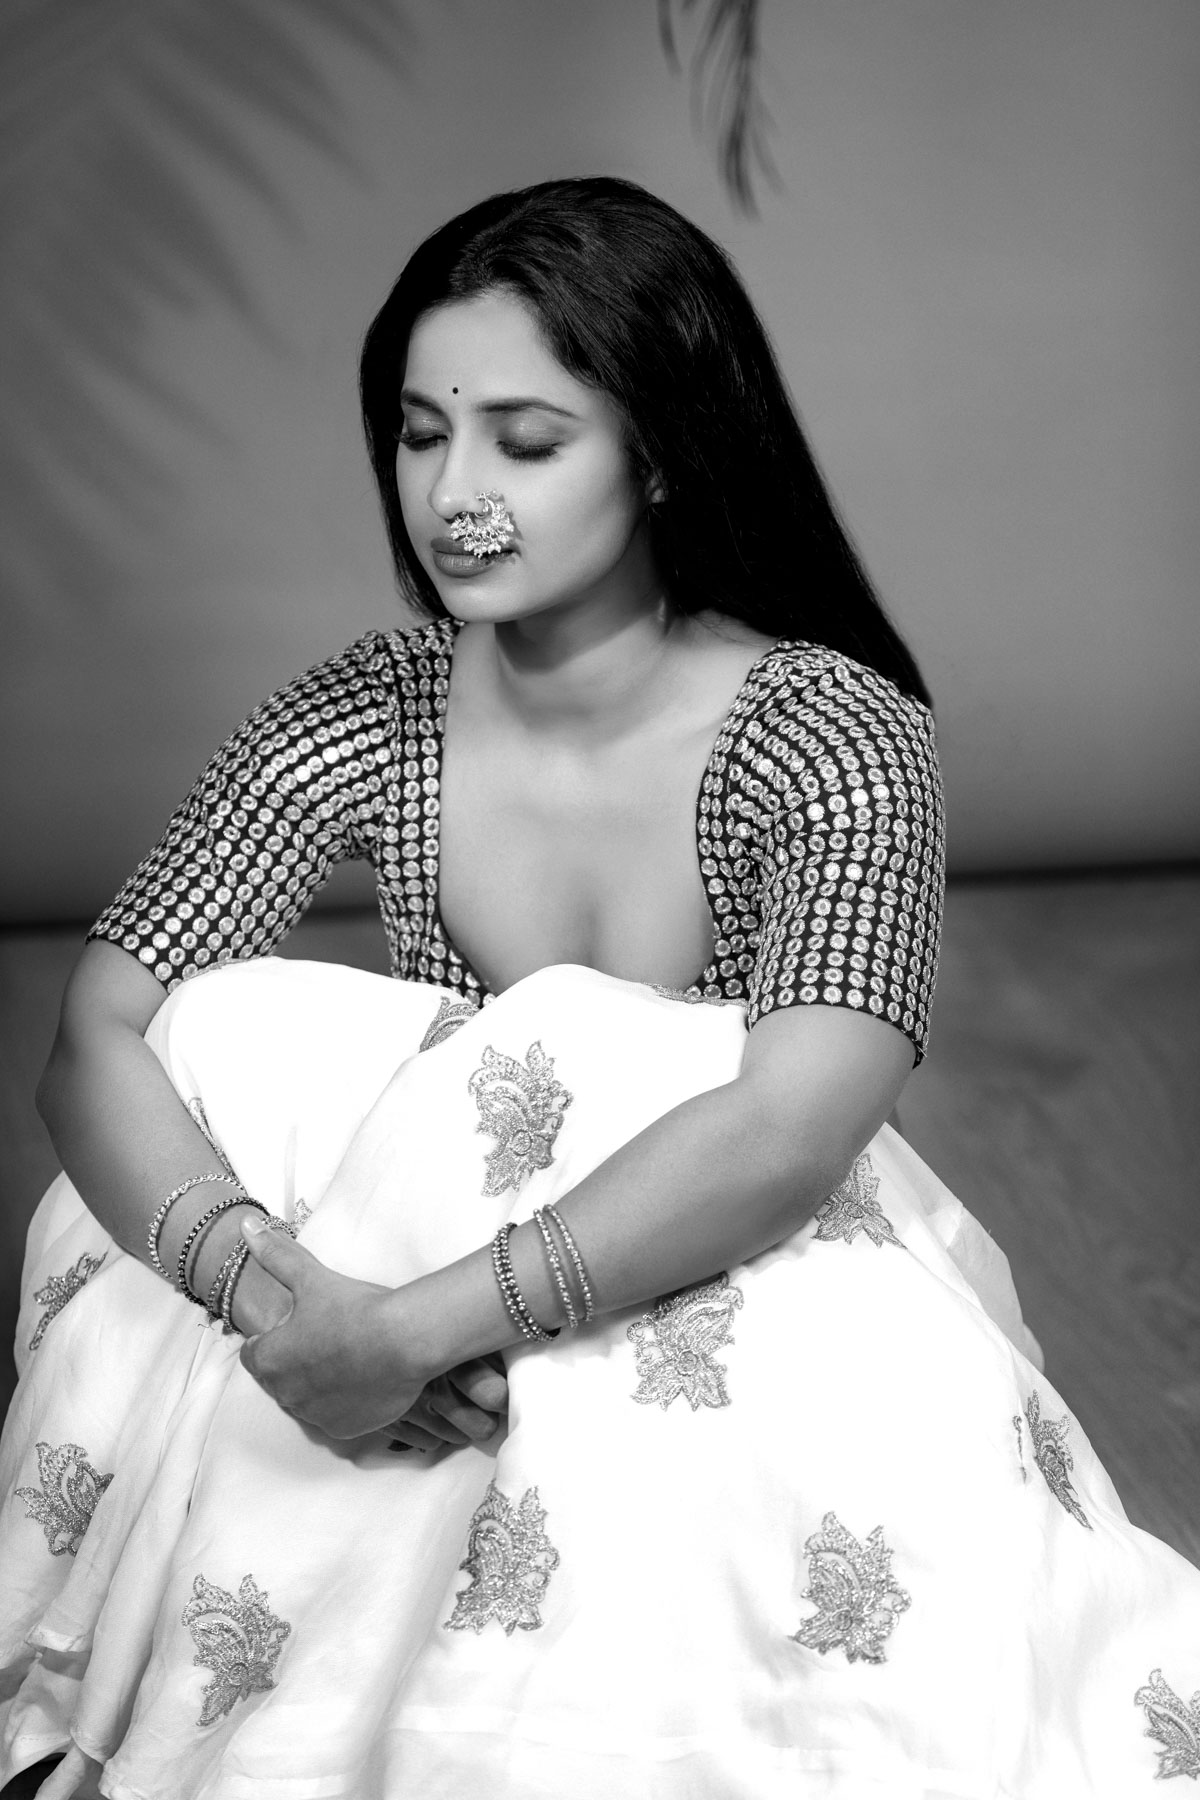 http://luckymalhotra.com/actress-ramya-krishna/